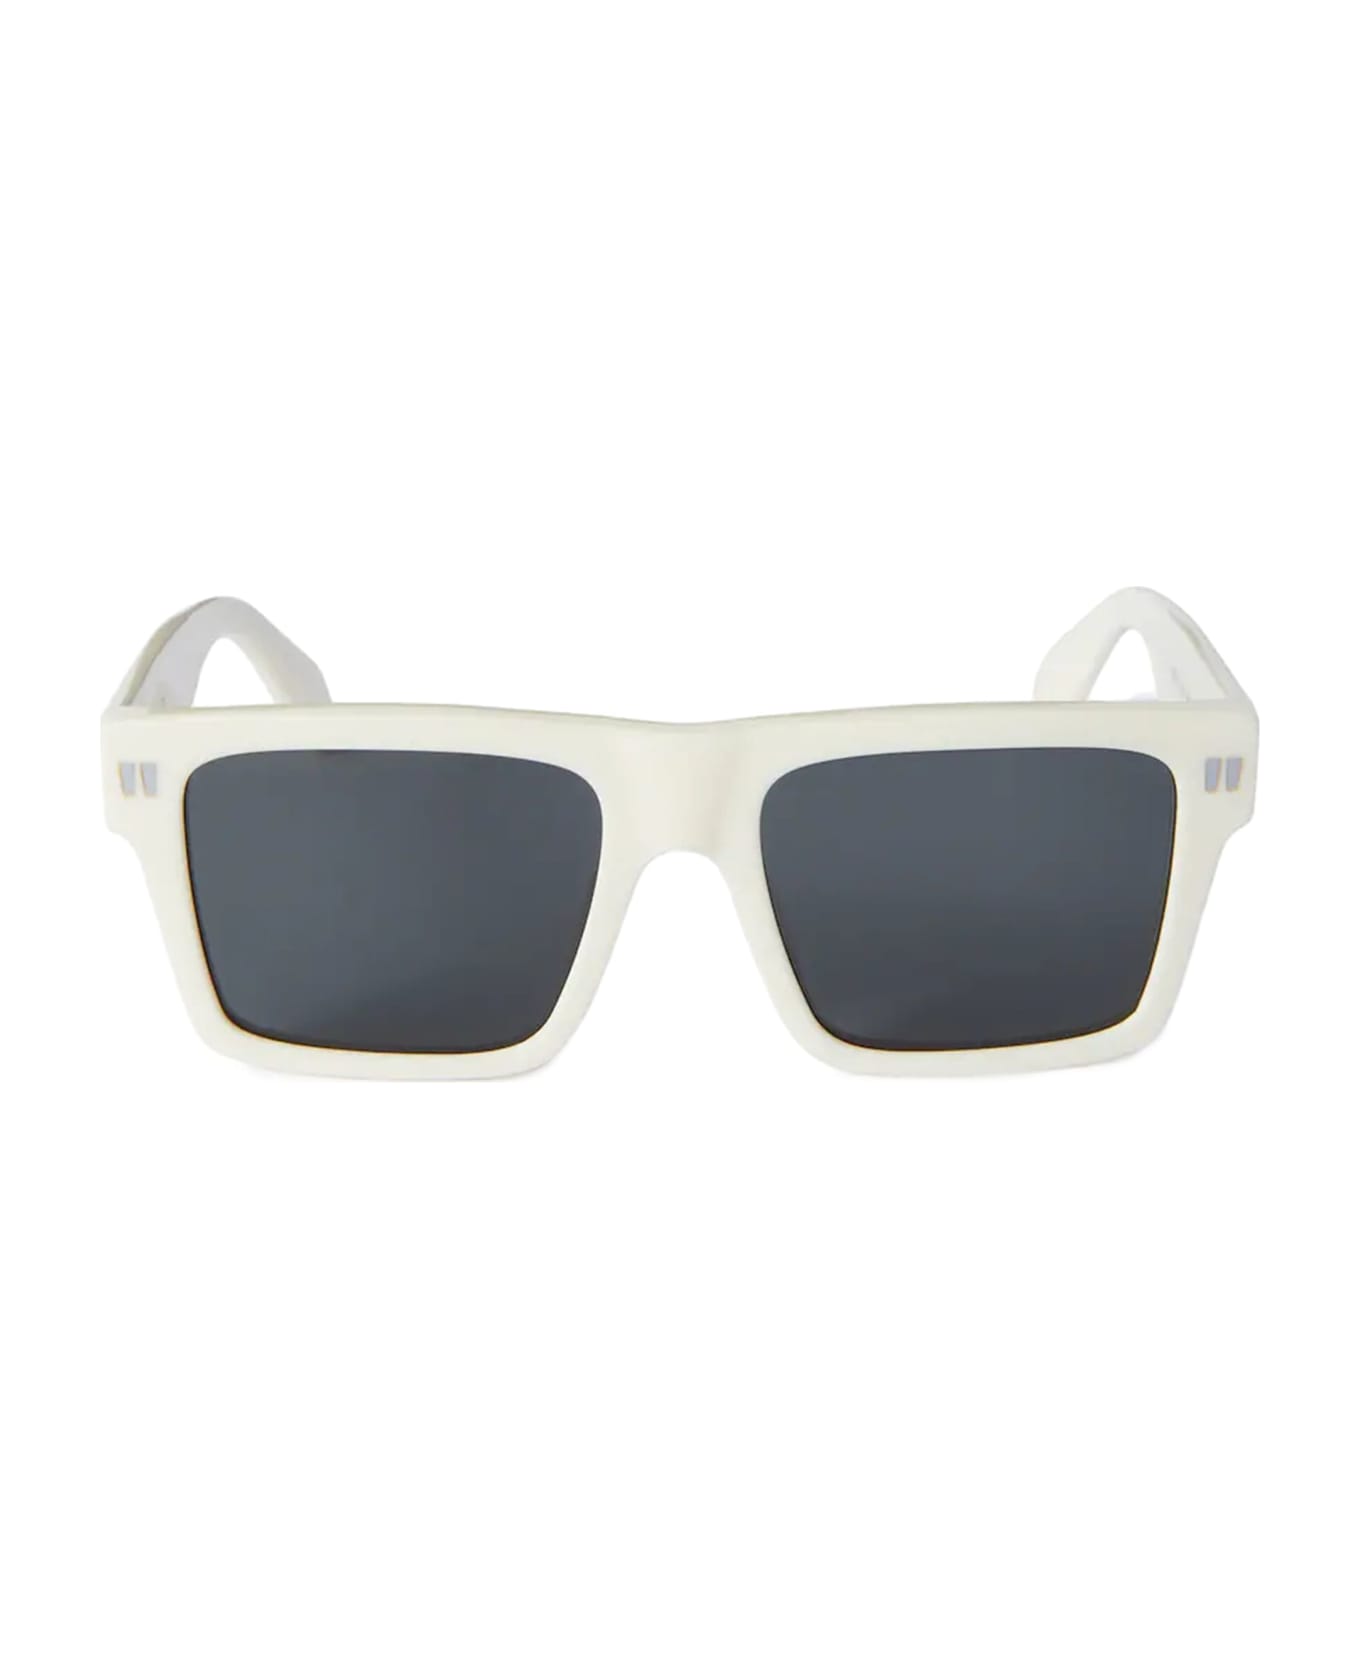 Off-White Lawton Sunglasses - White